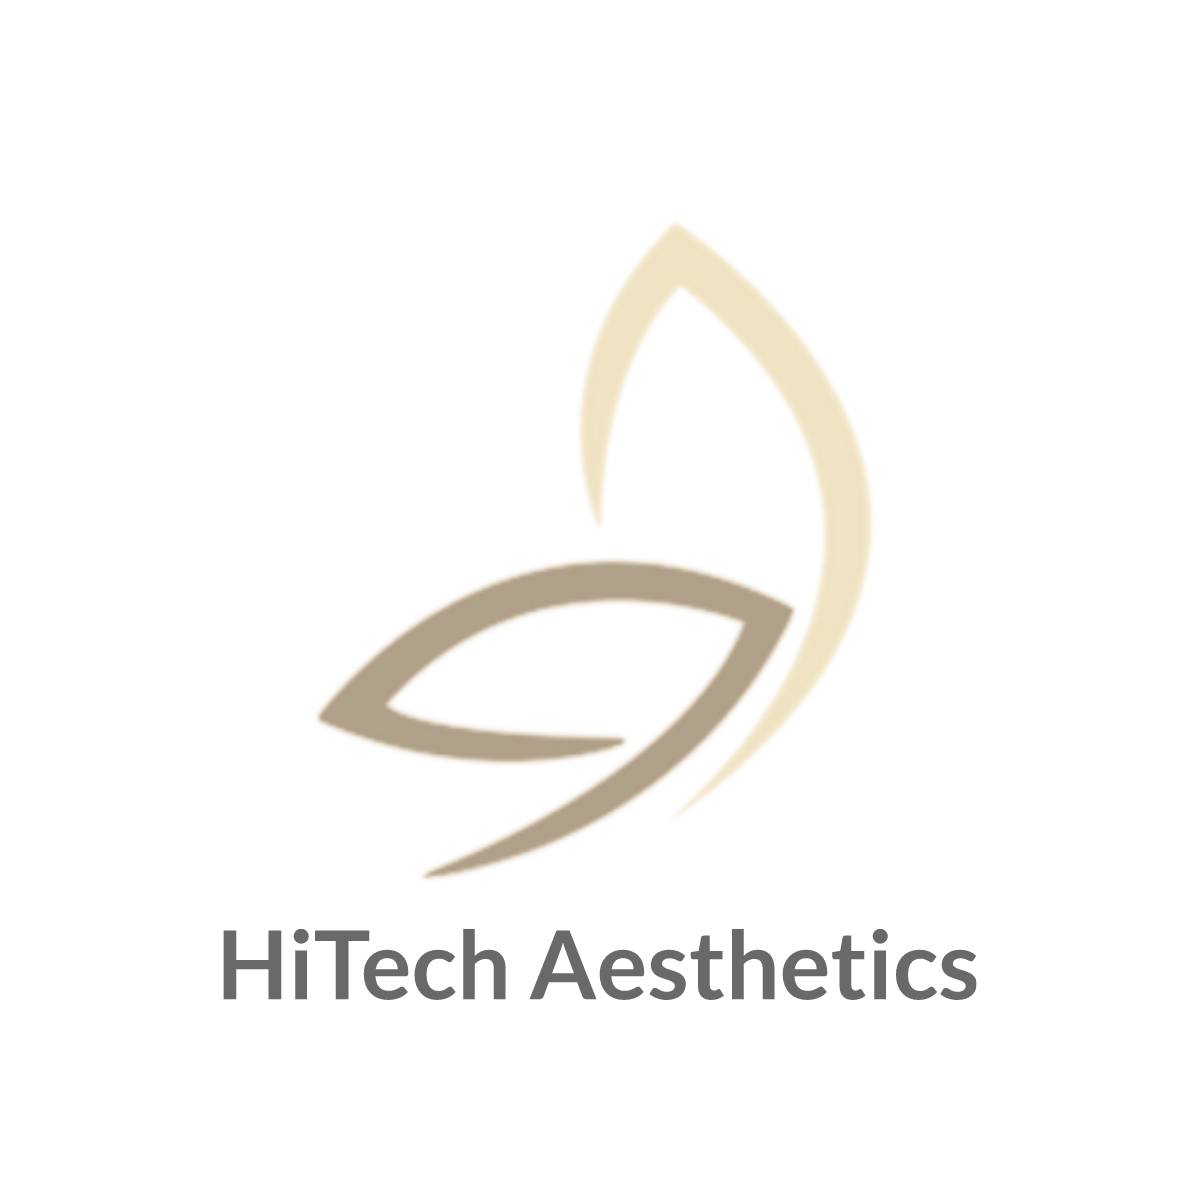 HiTech Aesthetics logo